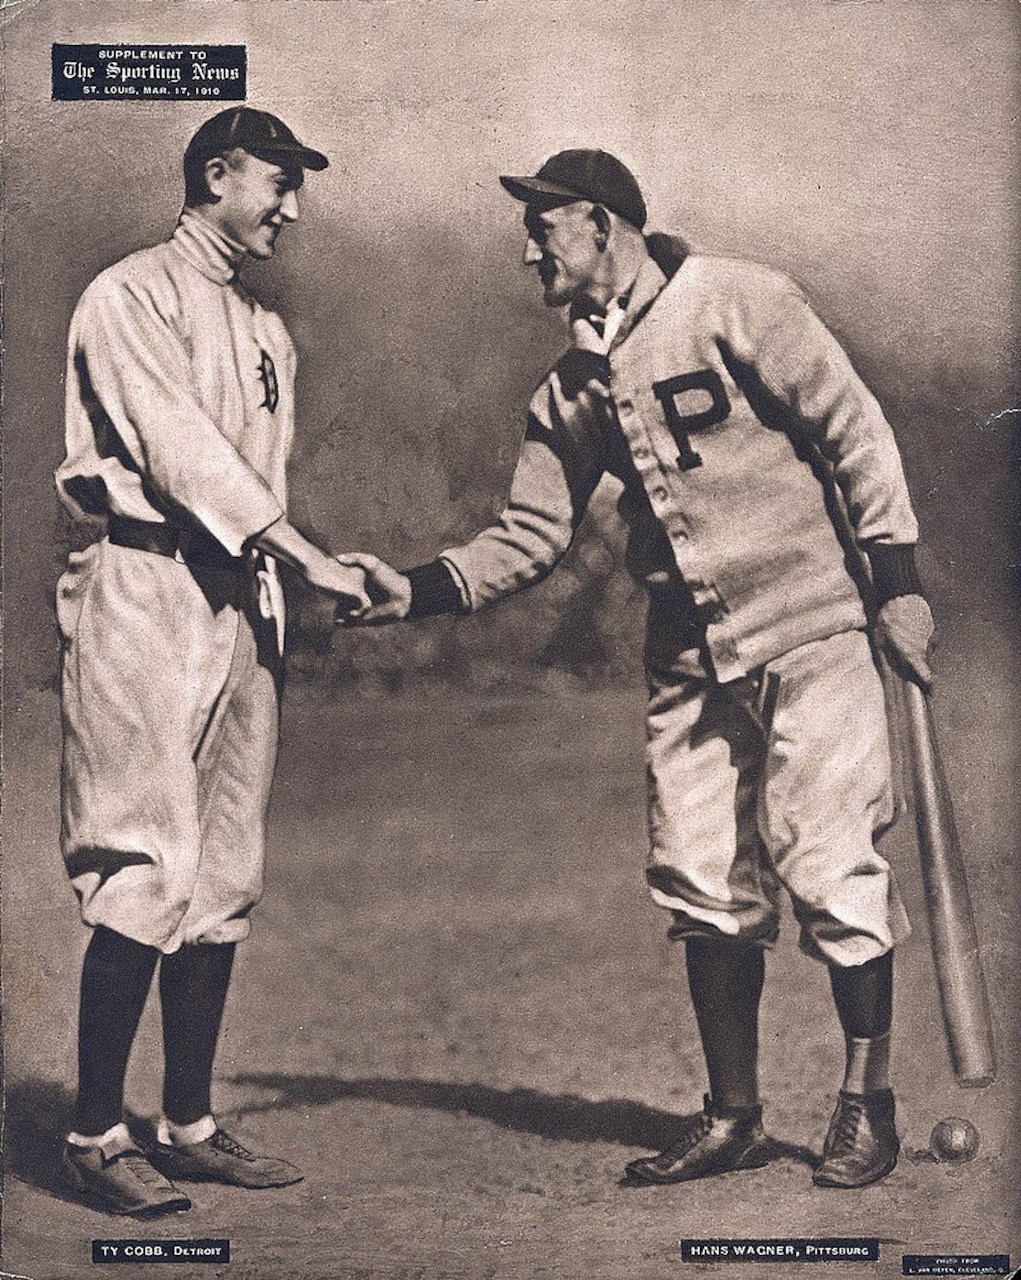 Two men in baseball uniforms shake hands.